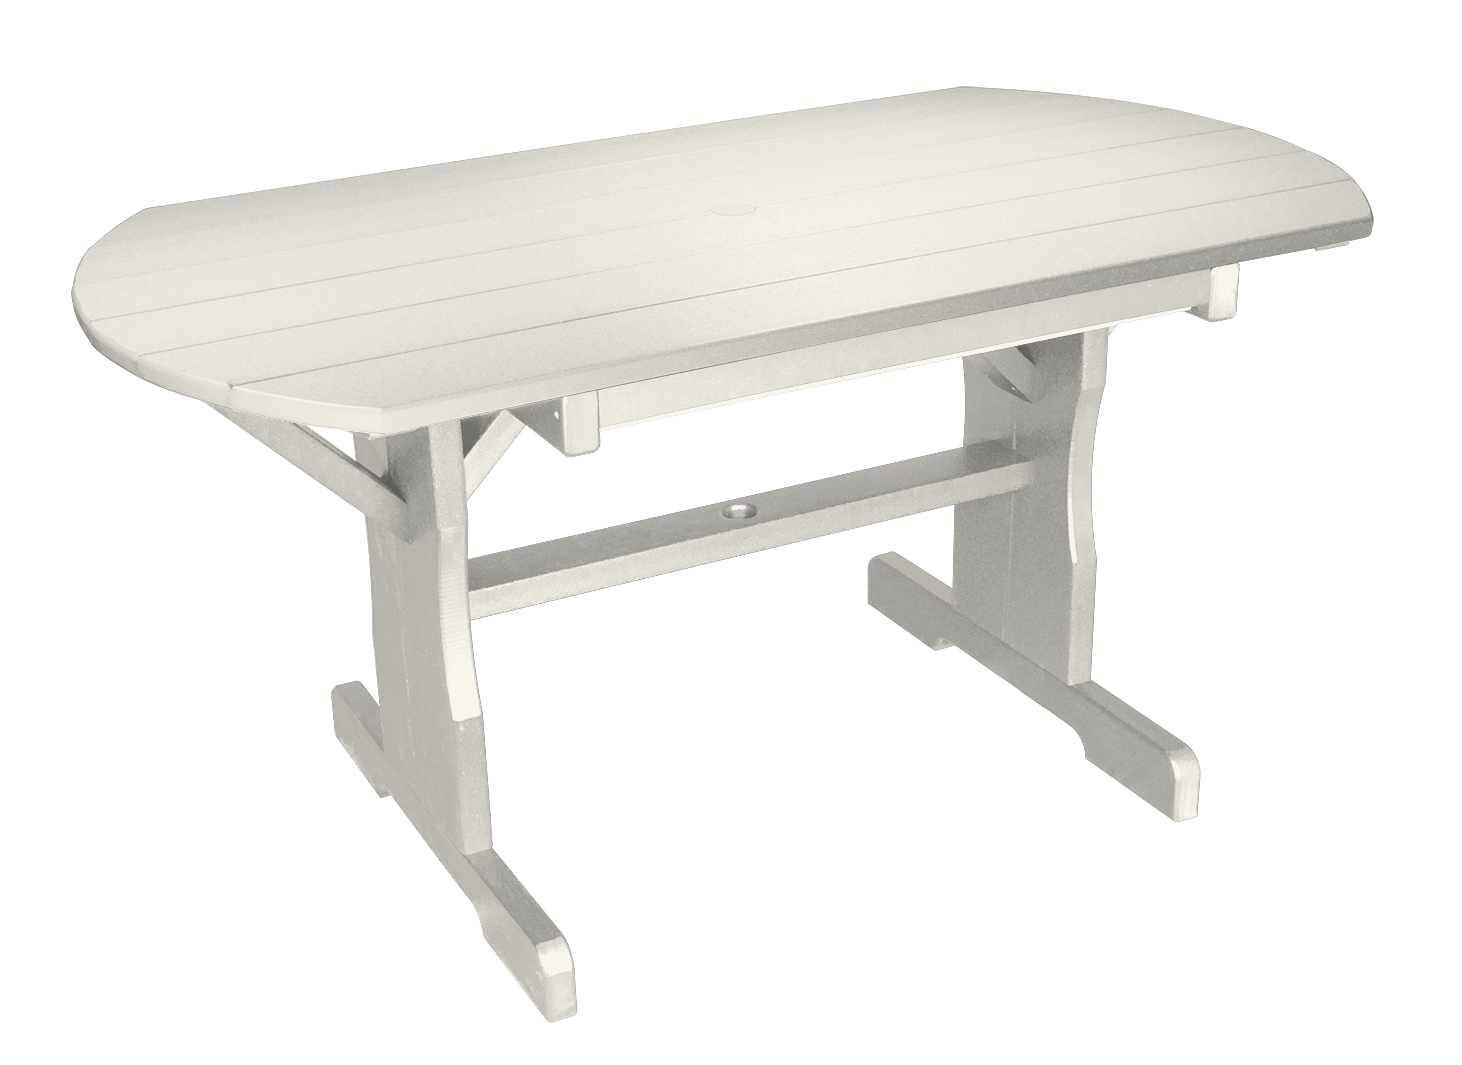 Basics Oval Picnic Table Image